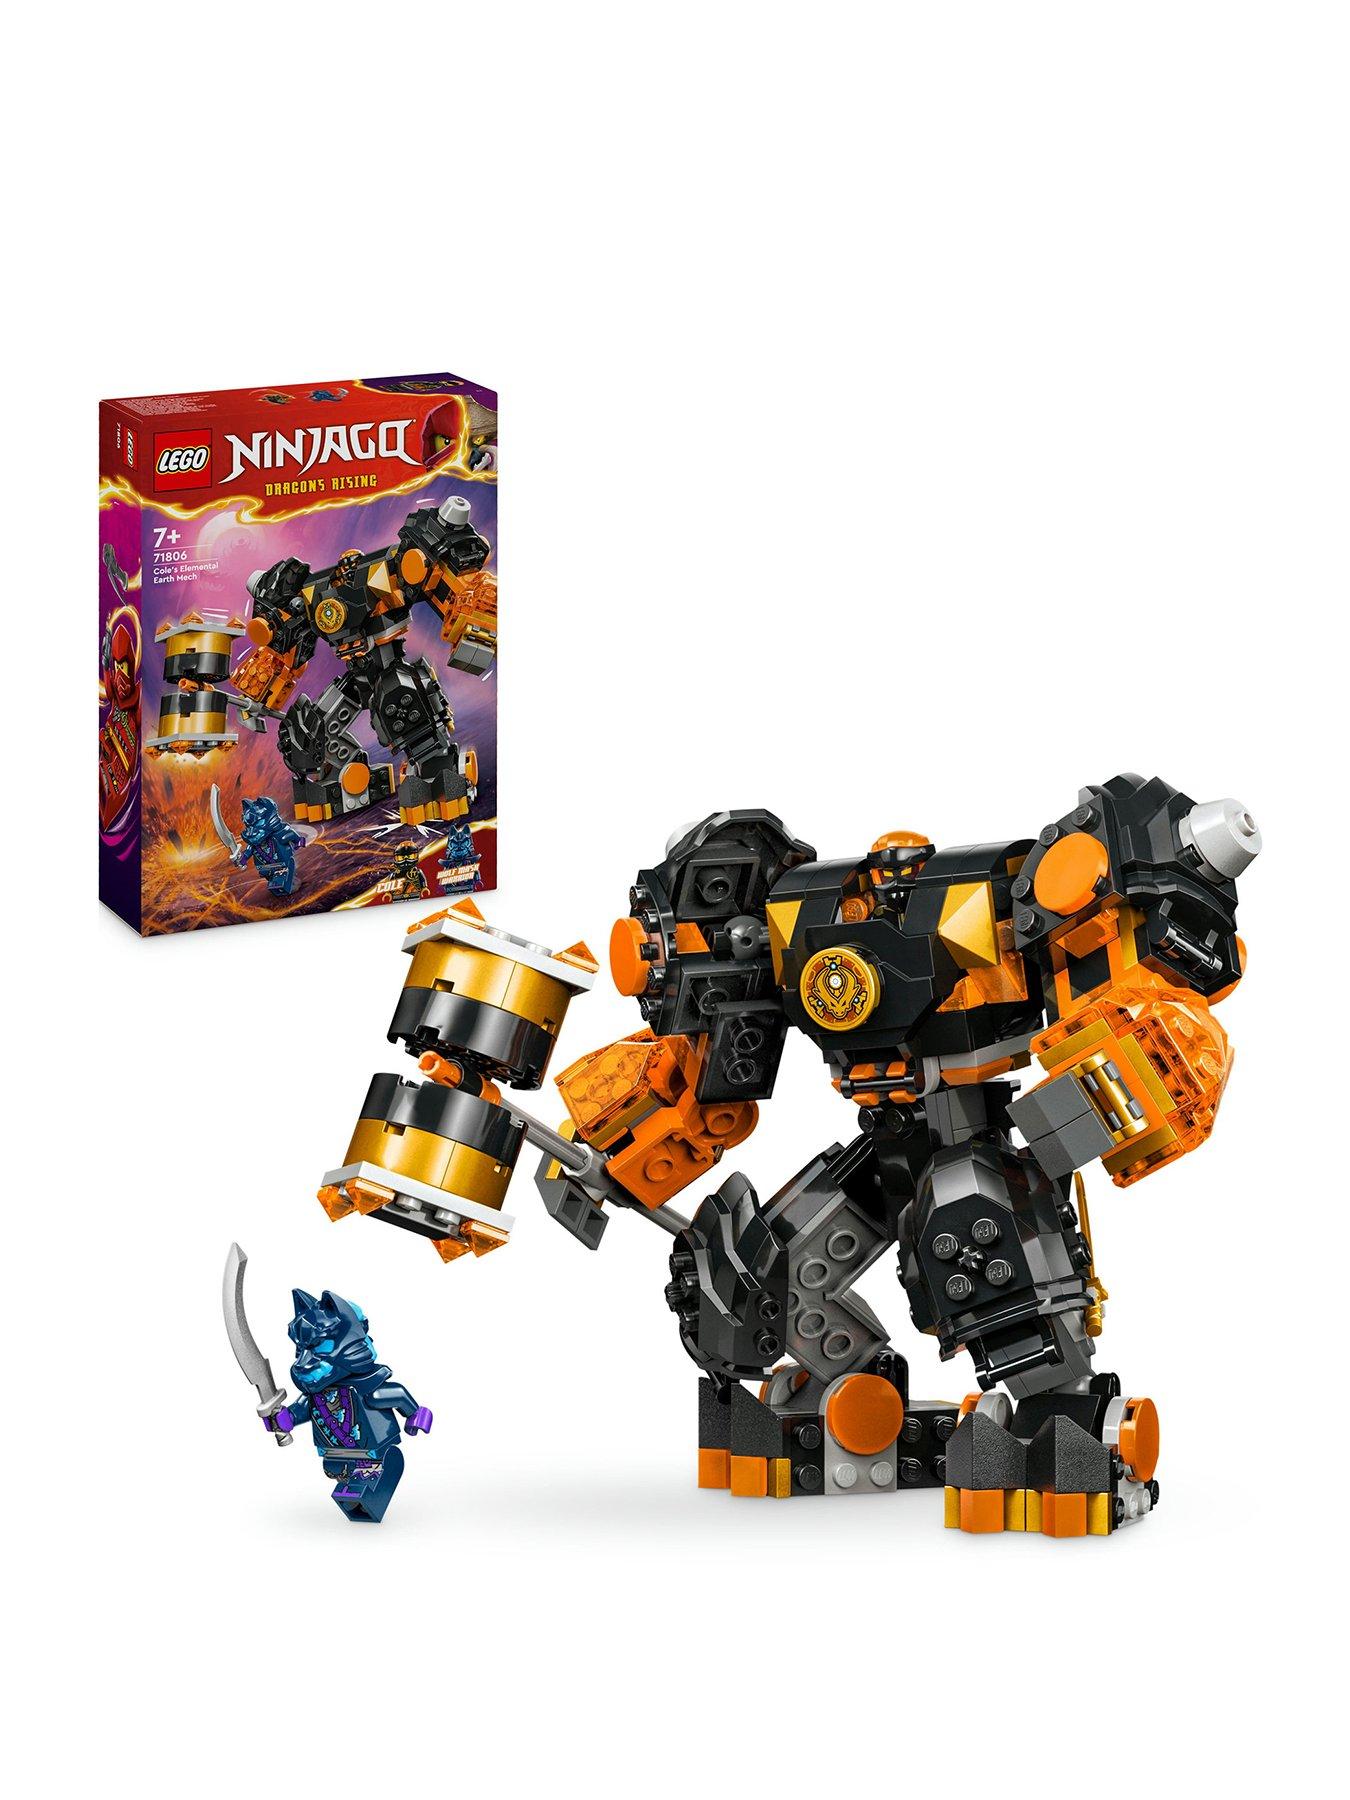  Lego Ninjago Le robot samouraï 154 pièces à 7,62 €